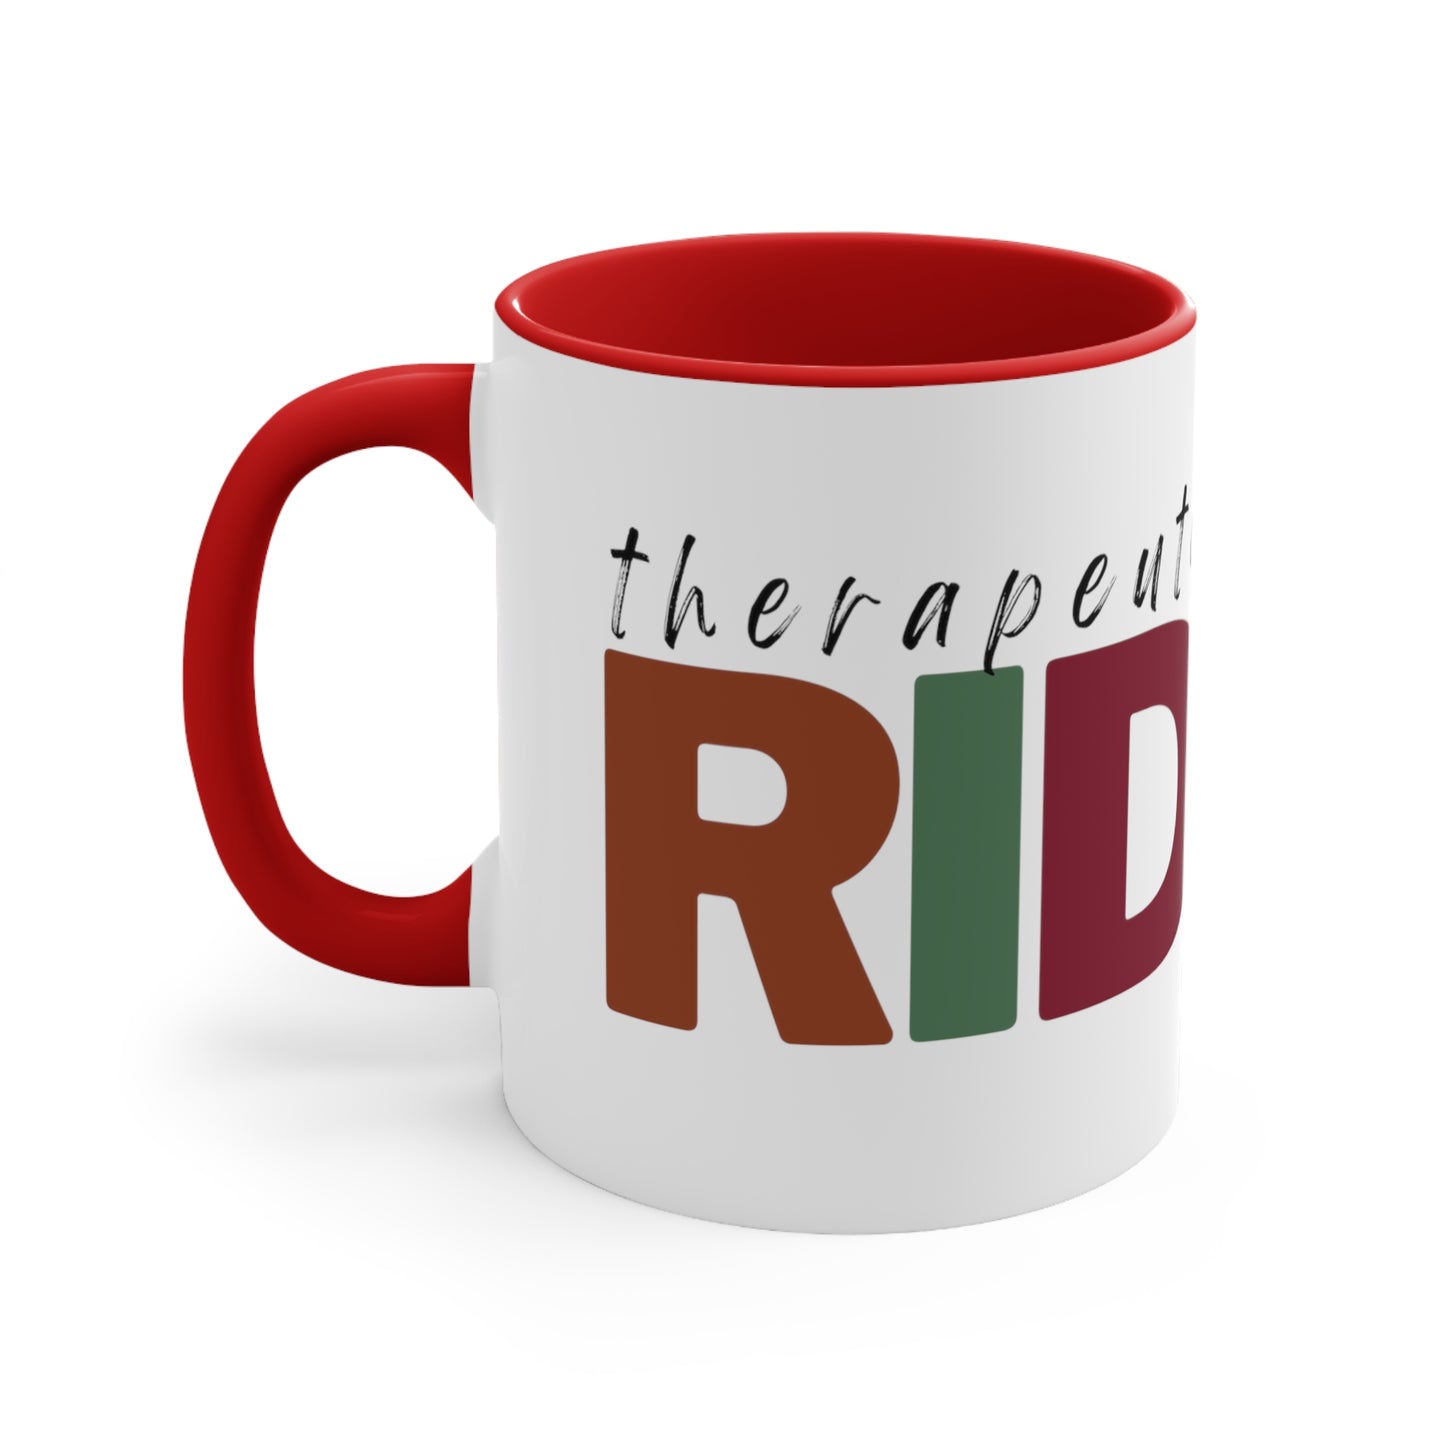 Therapeutic Riding Instructor Mug 11 oz mug